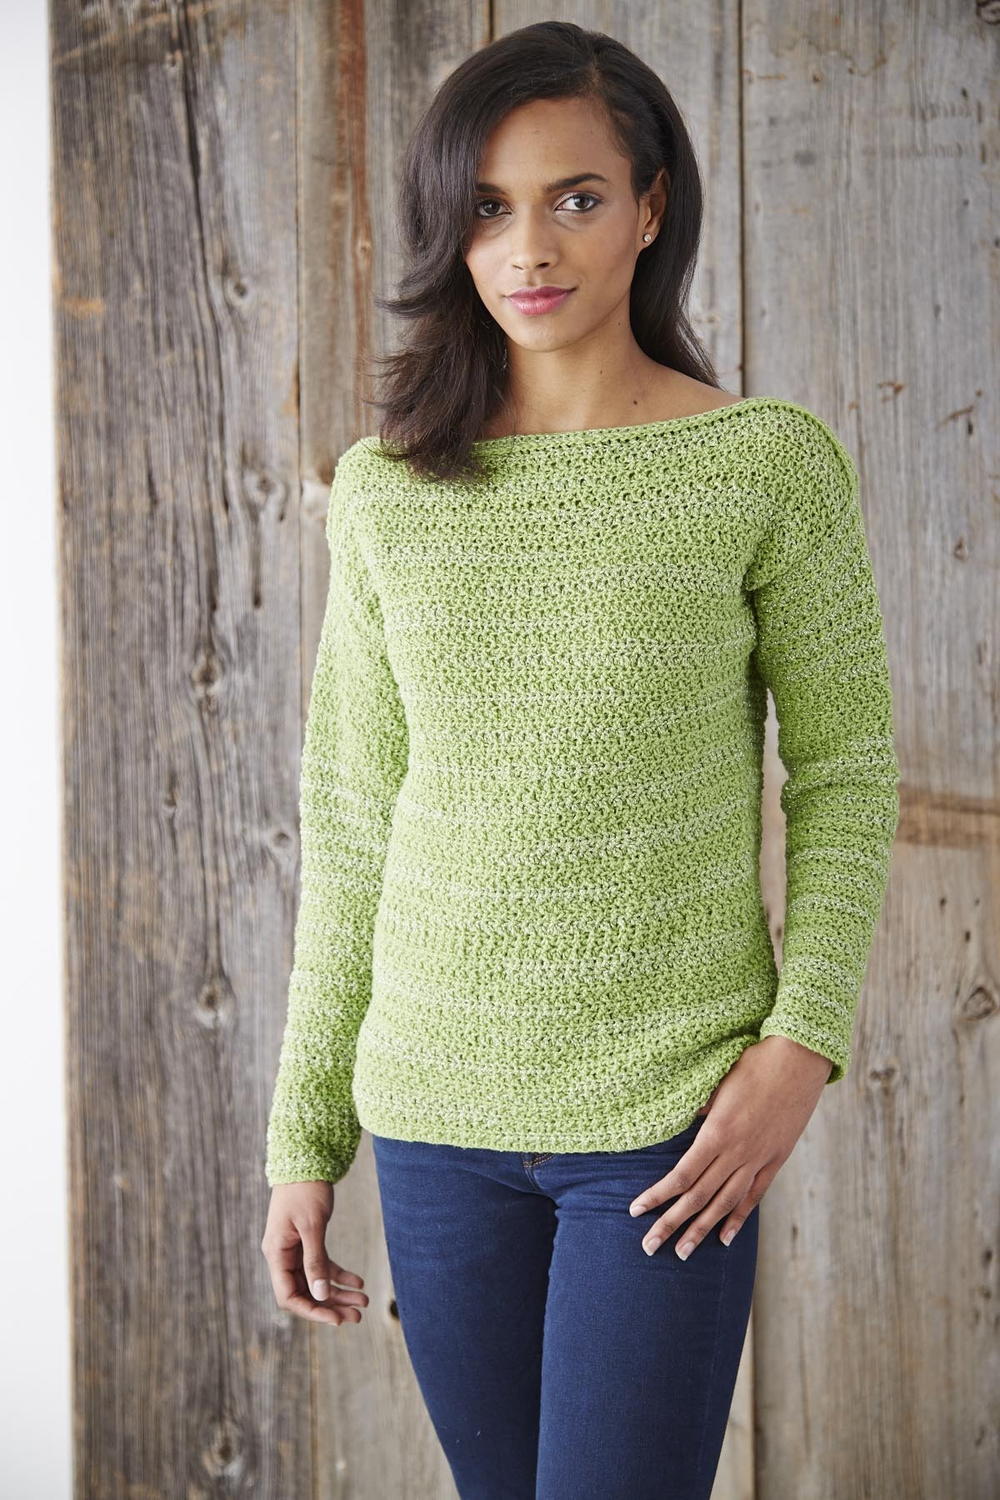 Boat Neck Pullover Sweater | AllFreeCrochet.com